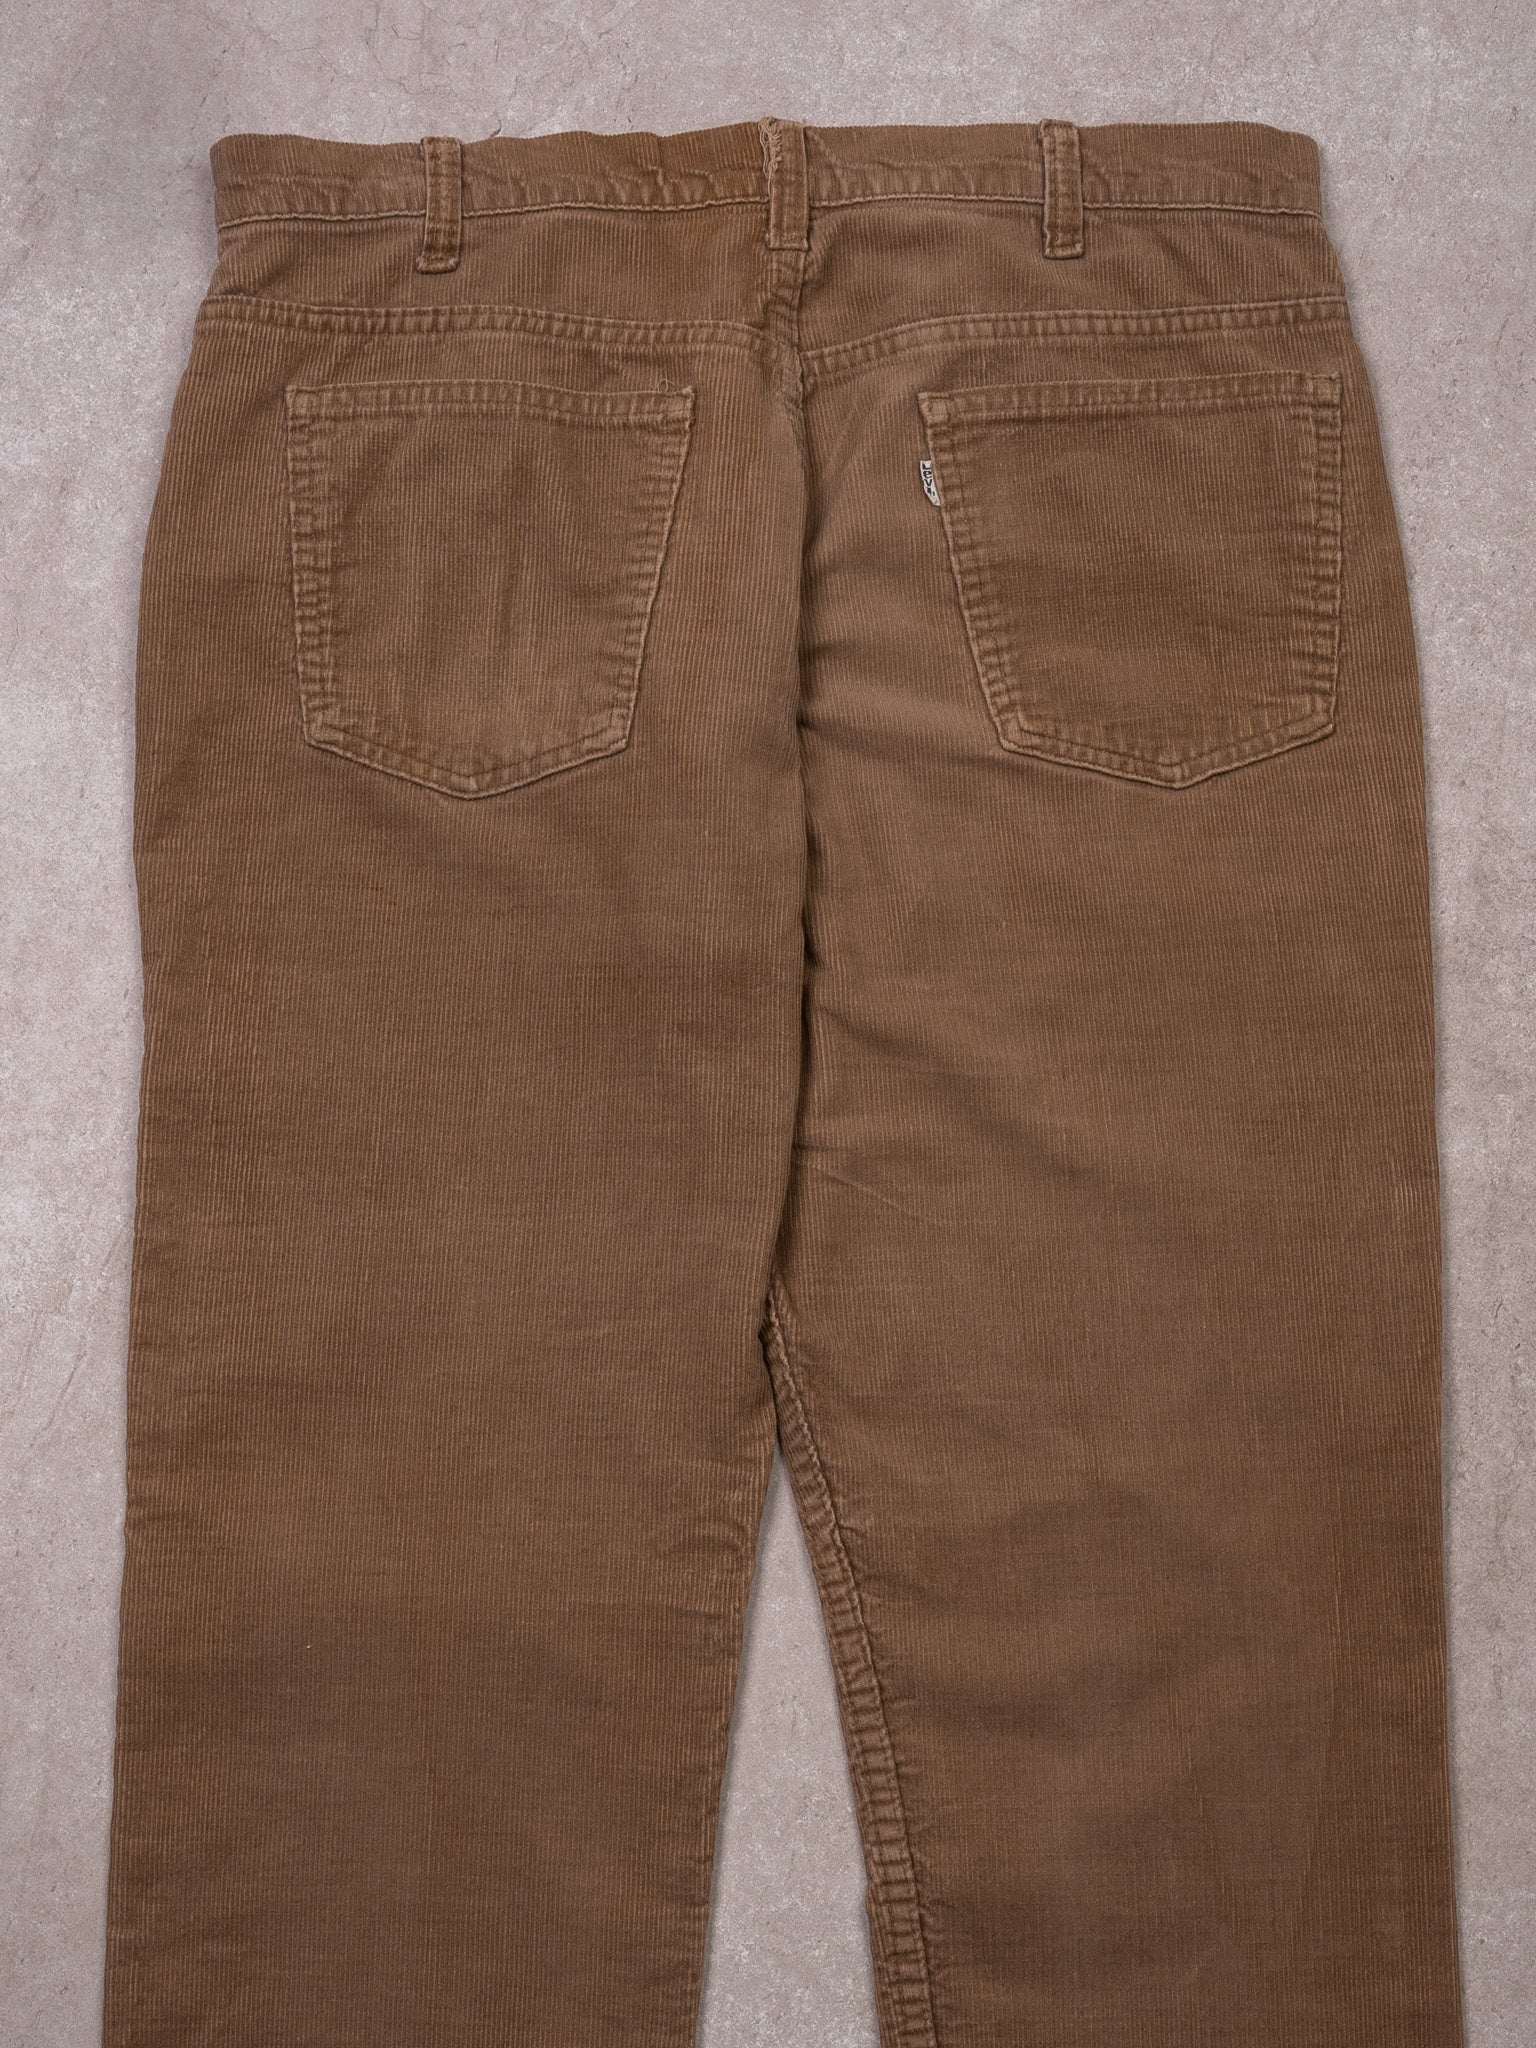 Vintage Beige Levi Corduroy White Tab Pants (36 x 33)